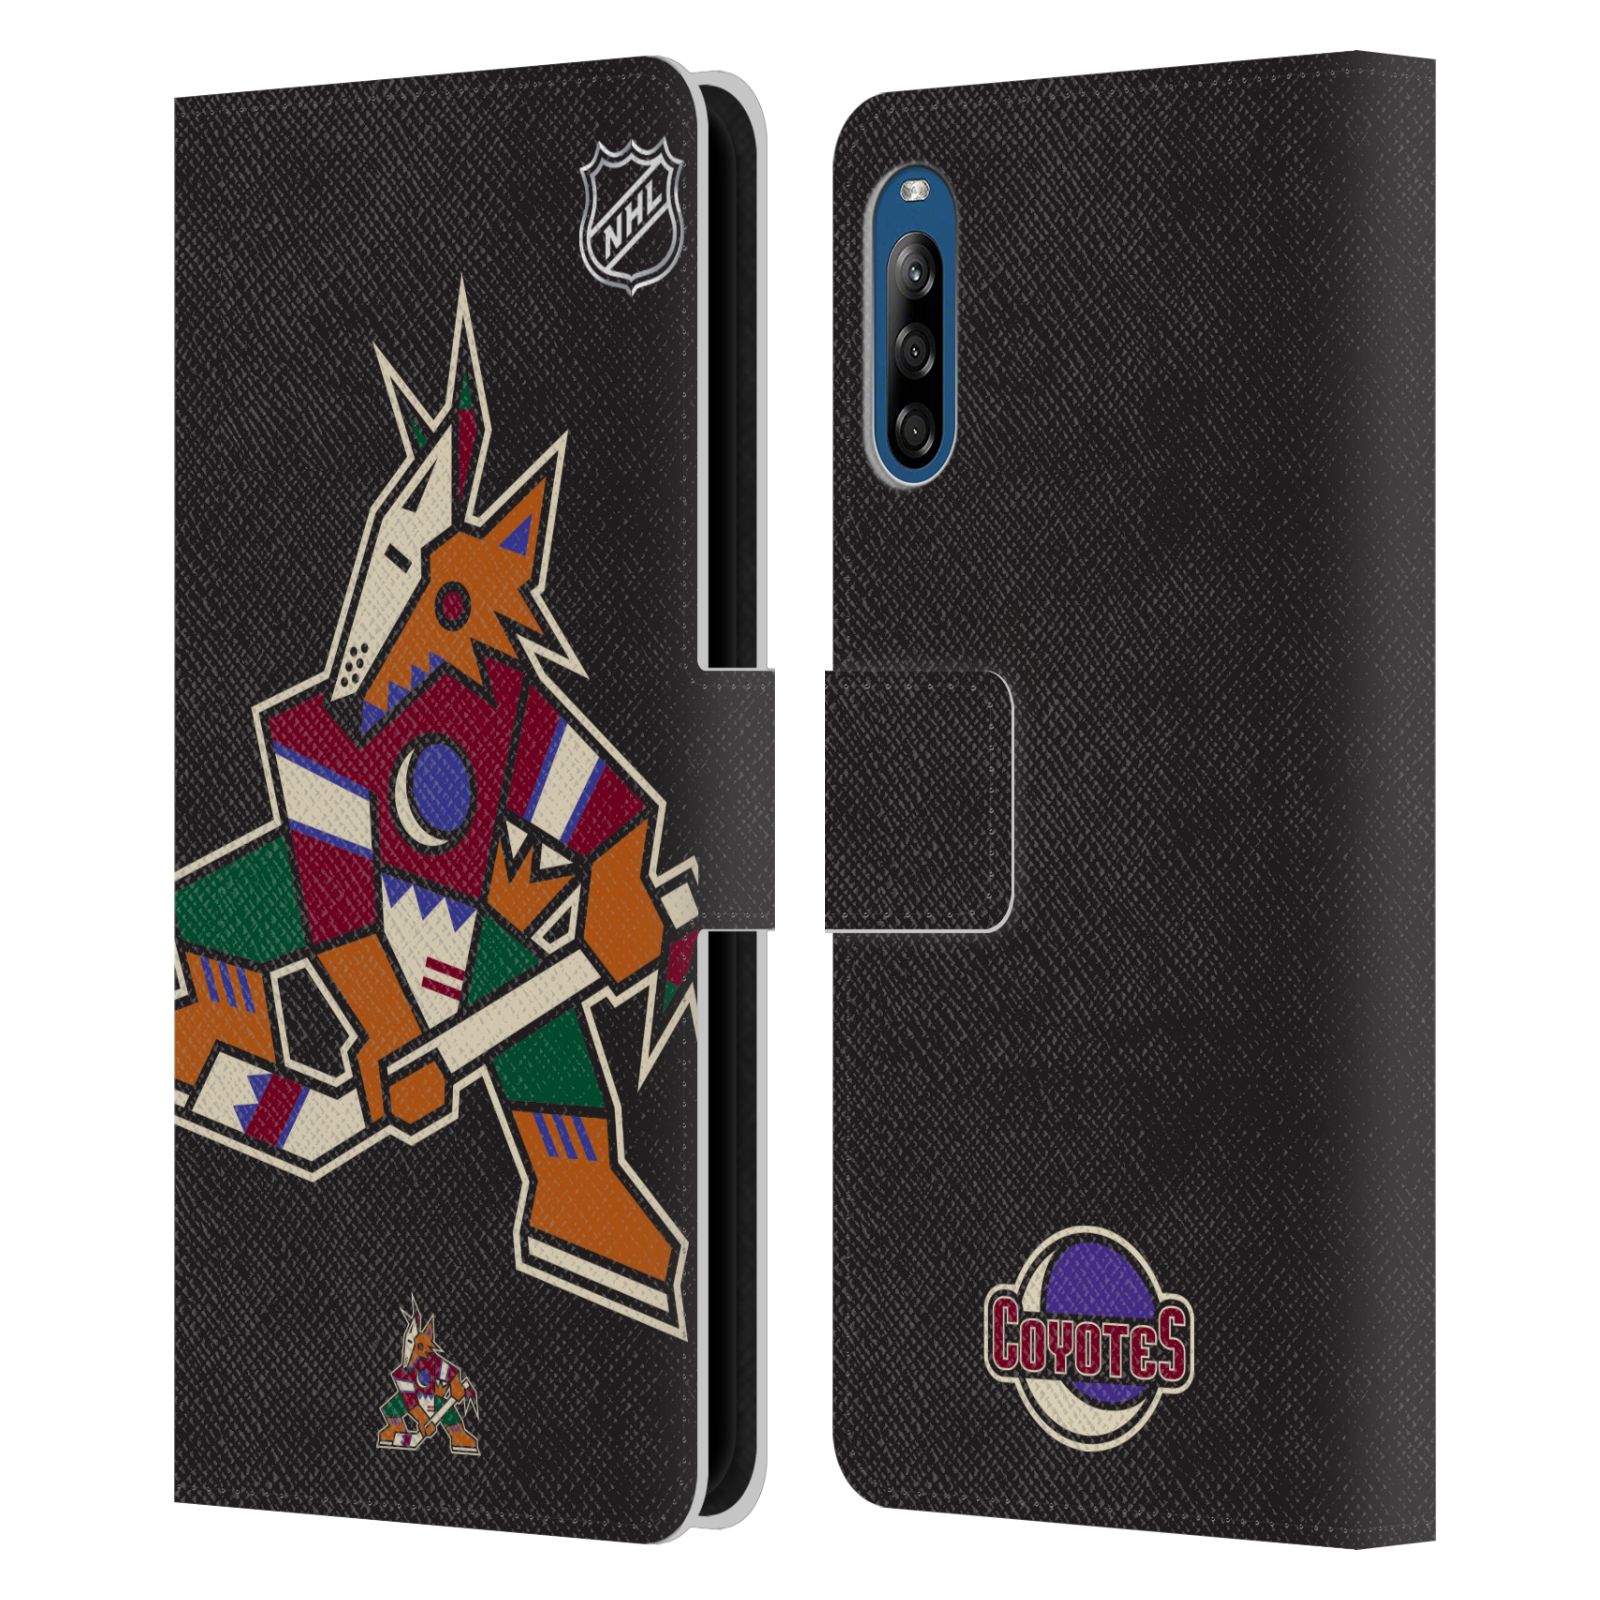 Pouzdro pro mobil Sony Xperia L4 - HEAD CASE - NHL - Arizona Coyotes - Velký znak